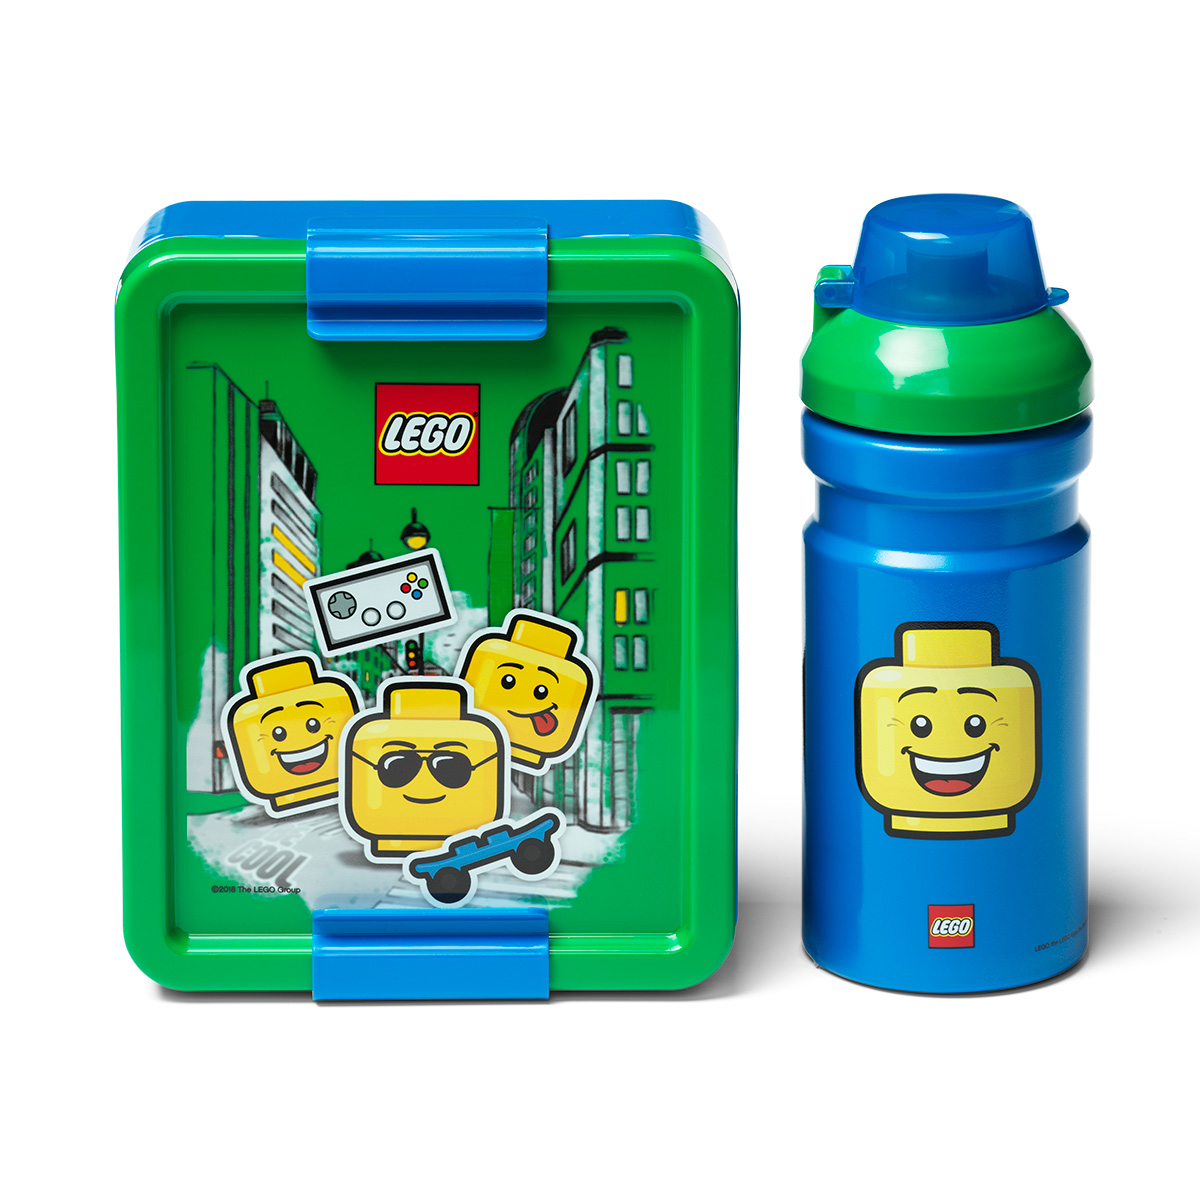 https://nh-g.com/wp-content/uploads/2022/04/40581724-LEGO-Lunch-Set-Boy.jpg